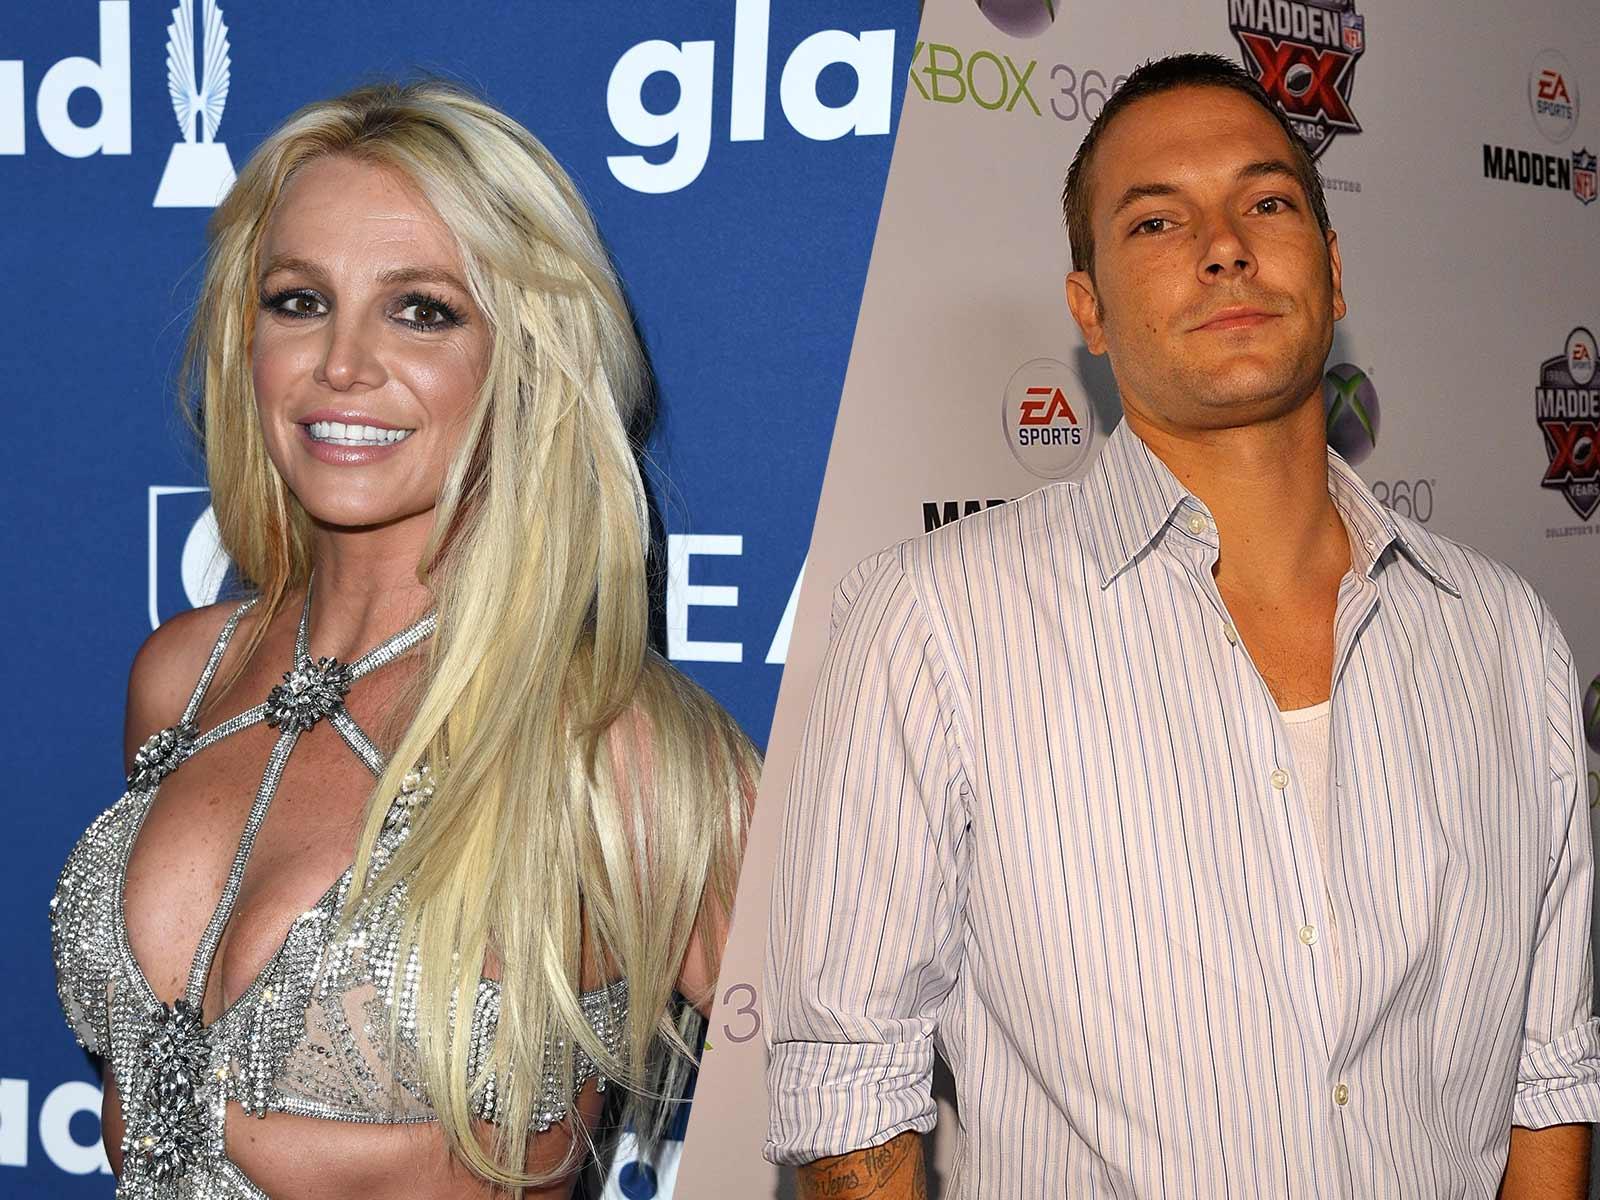 Britney Spears & Kevin Federline Settle Child Support War, Singer Agrees to Pay More